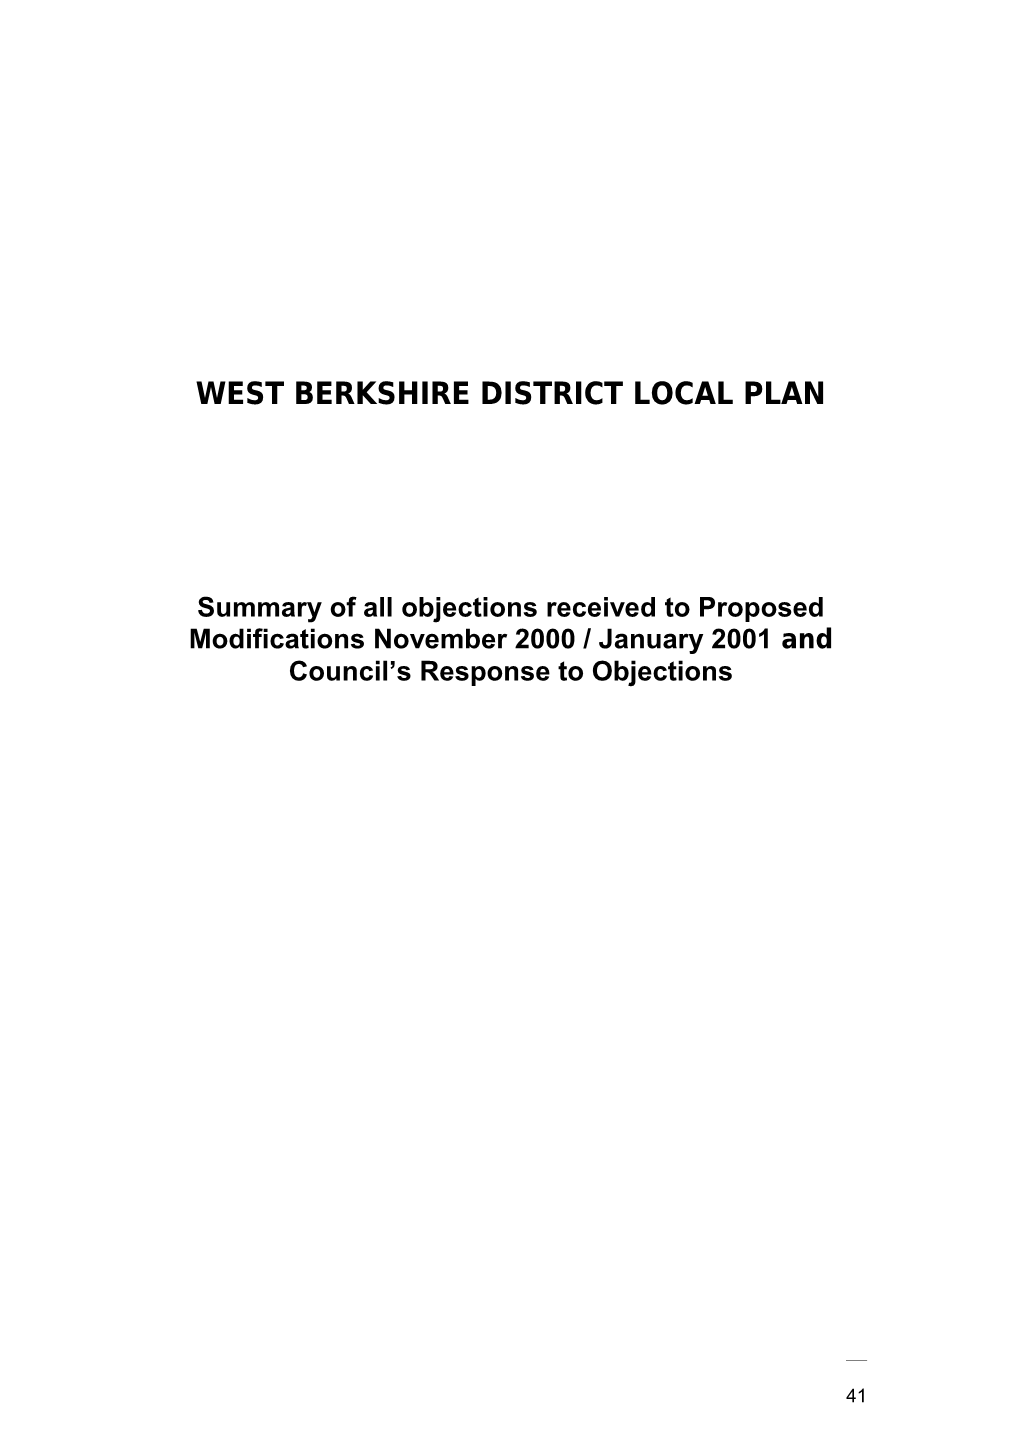 West Berkshire District Local Plan